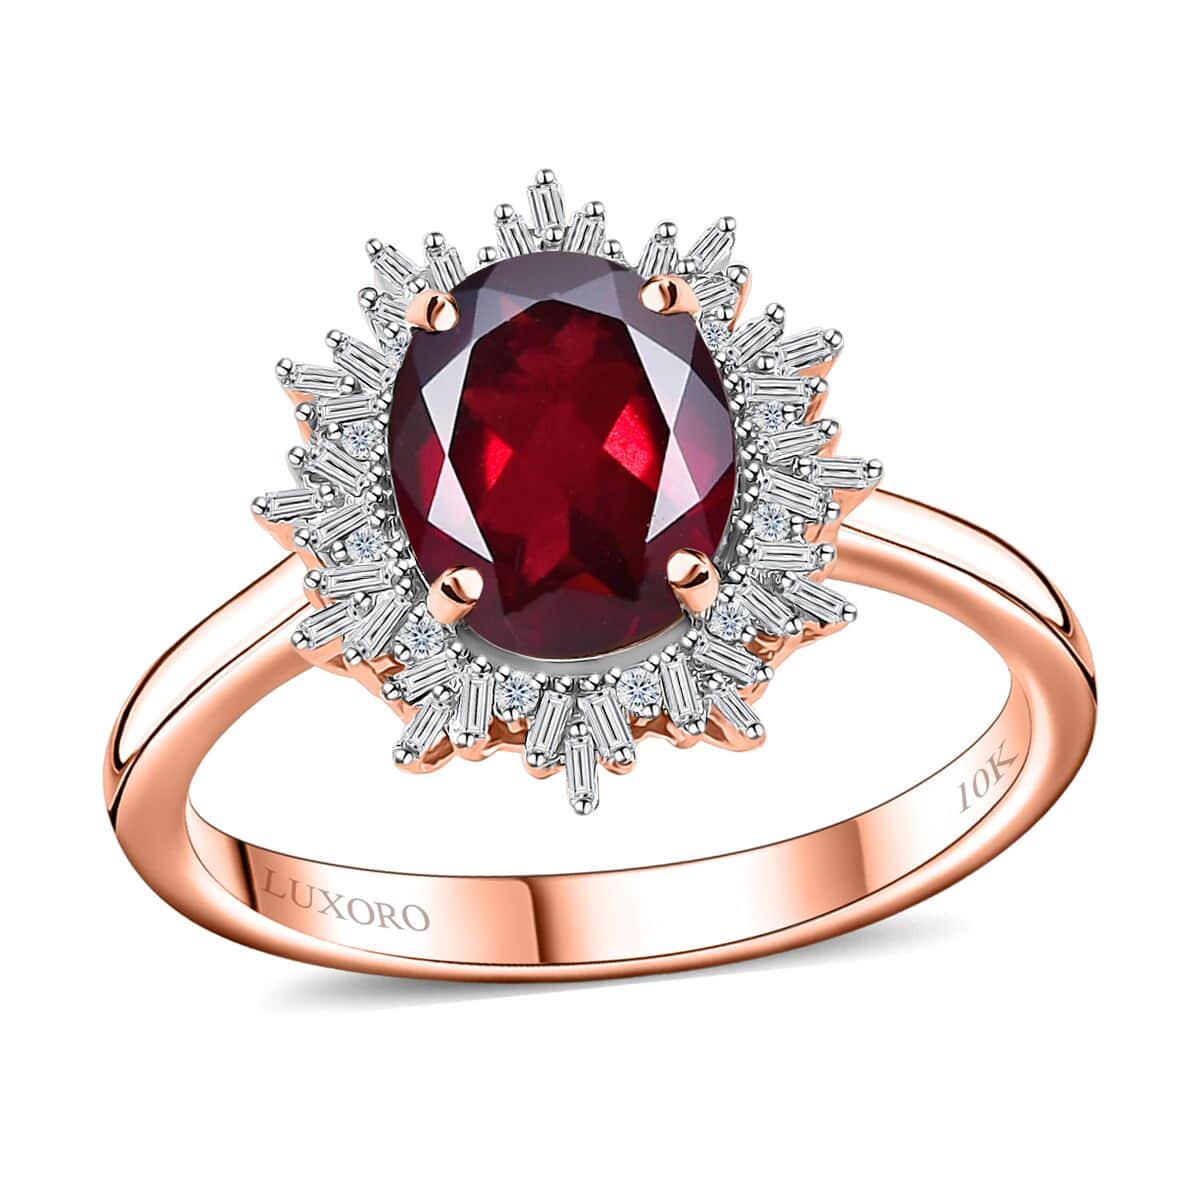 Luxoro 10K Rose Gold Premium Orissa Rhodolite Garnet and G-H I2 Diamond Ring (Size 10.0) 3.40 ctw (Del. in 10-12 Days) image number 0